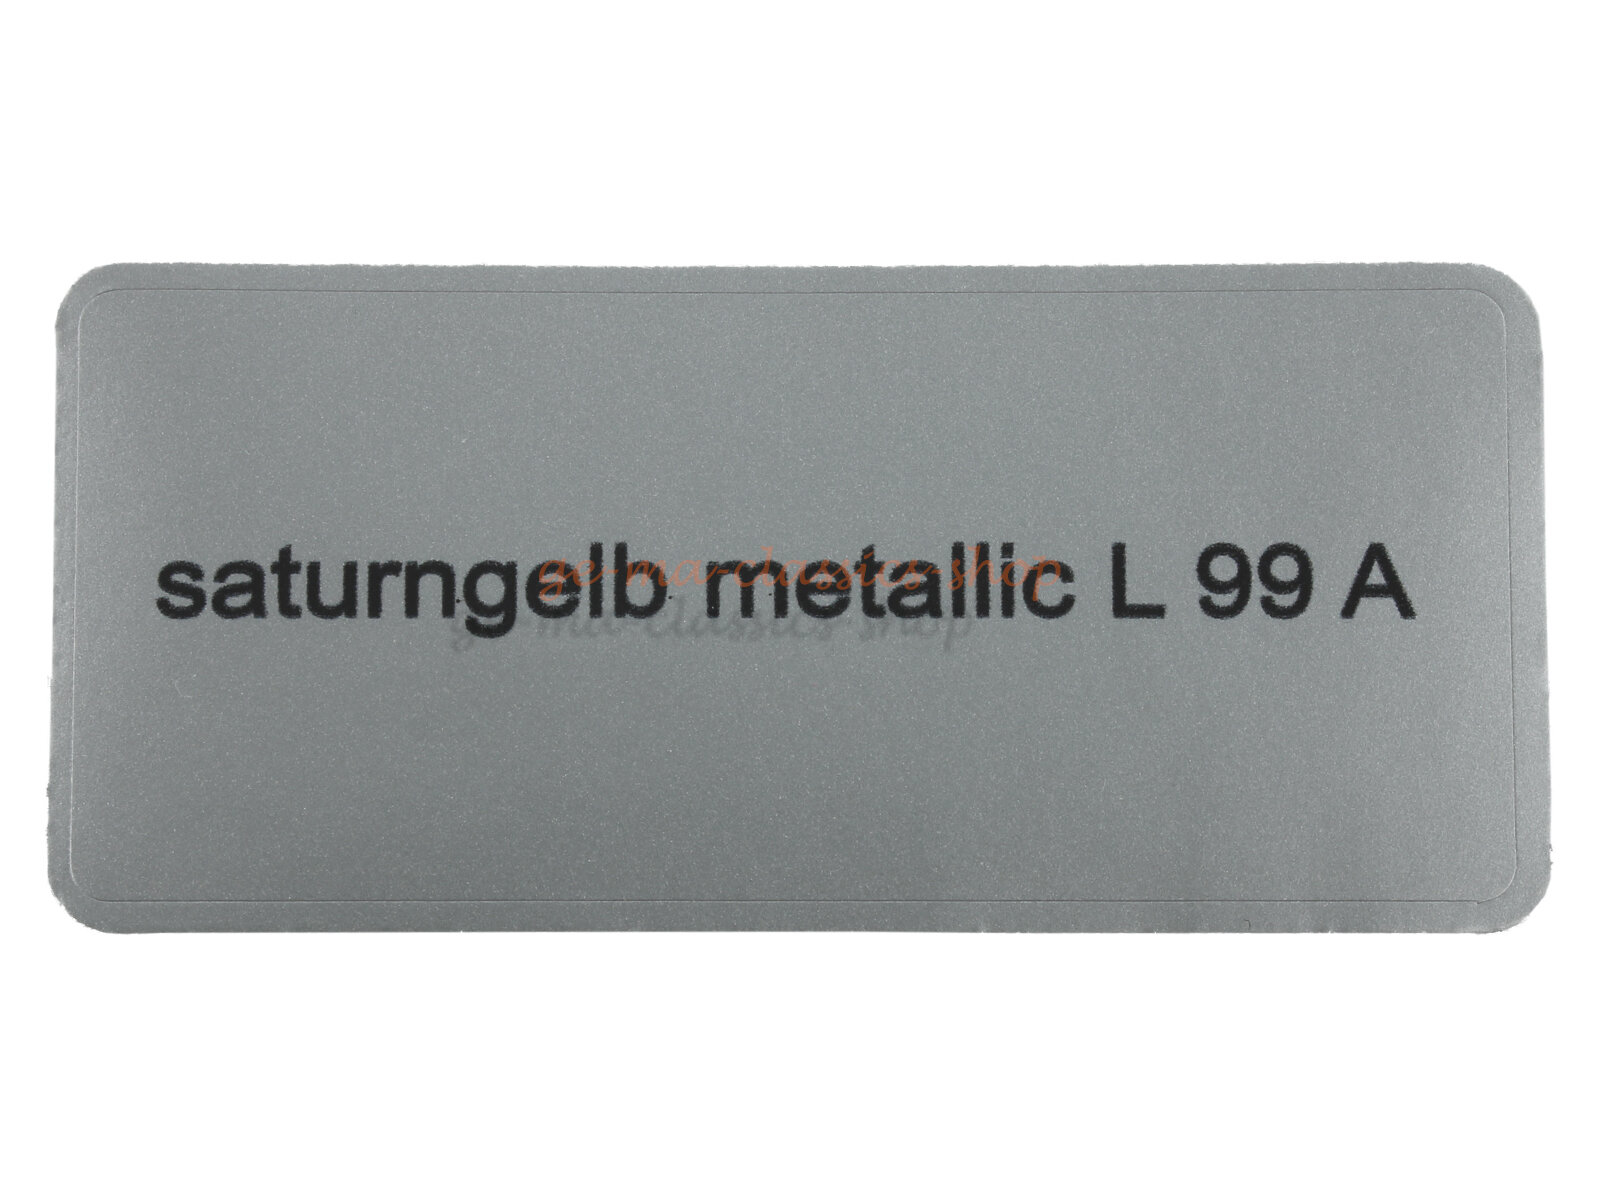 Aufkleber "saturngelb metallic L 99 A" Farbcode Sticker